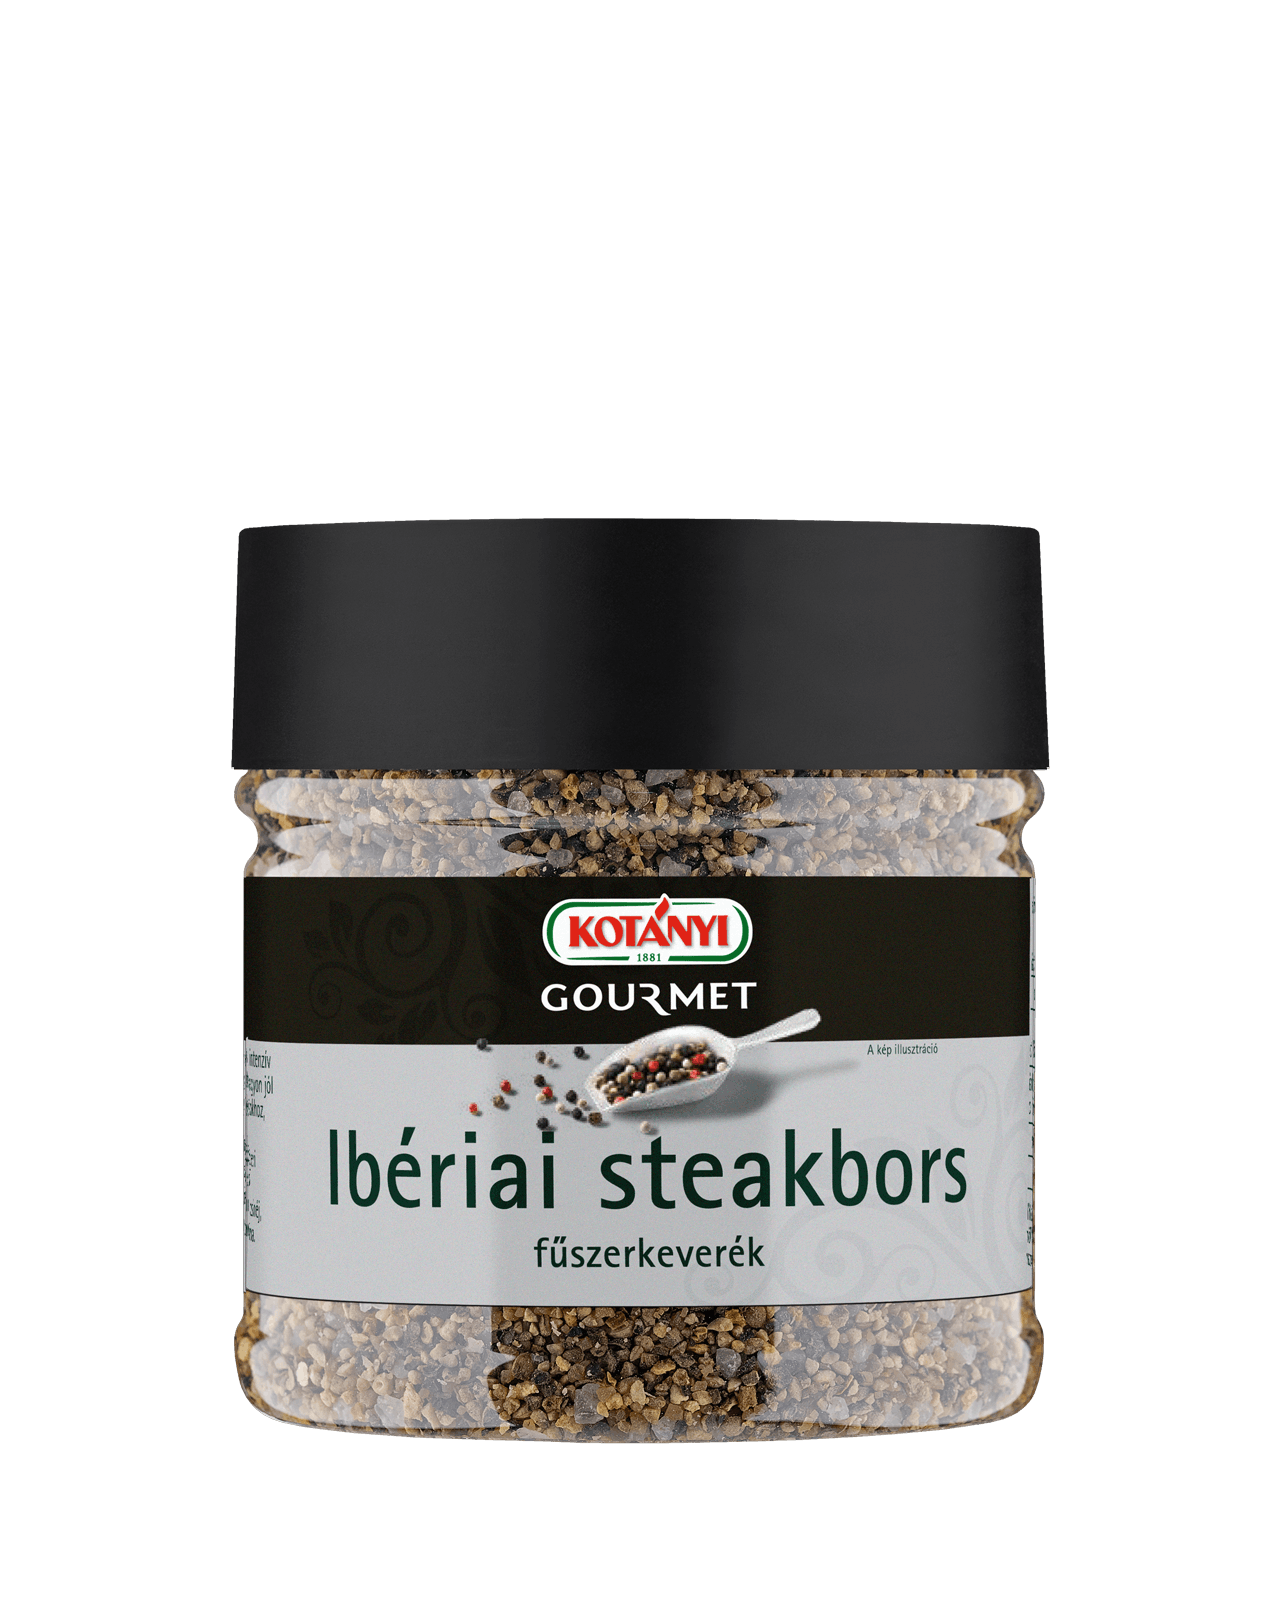 745502 Kotanyi Iberiai Steakbors B2b Pet400